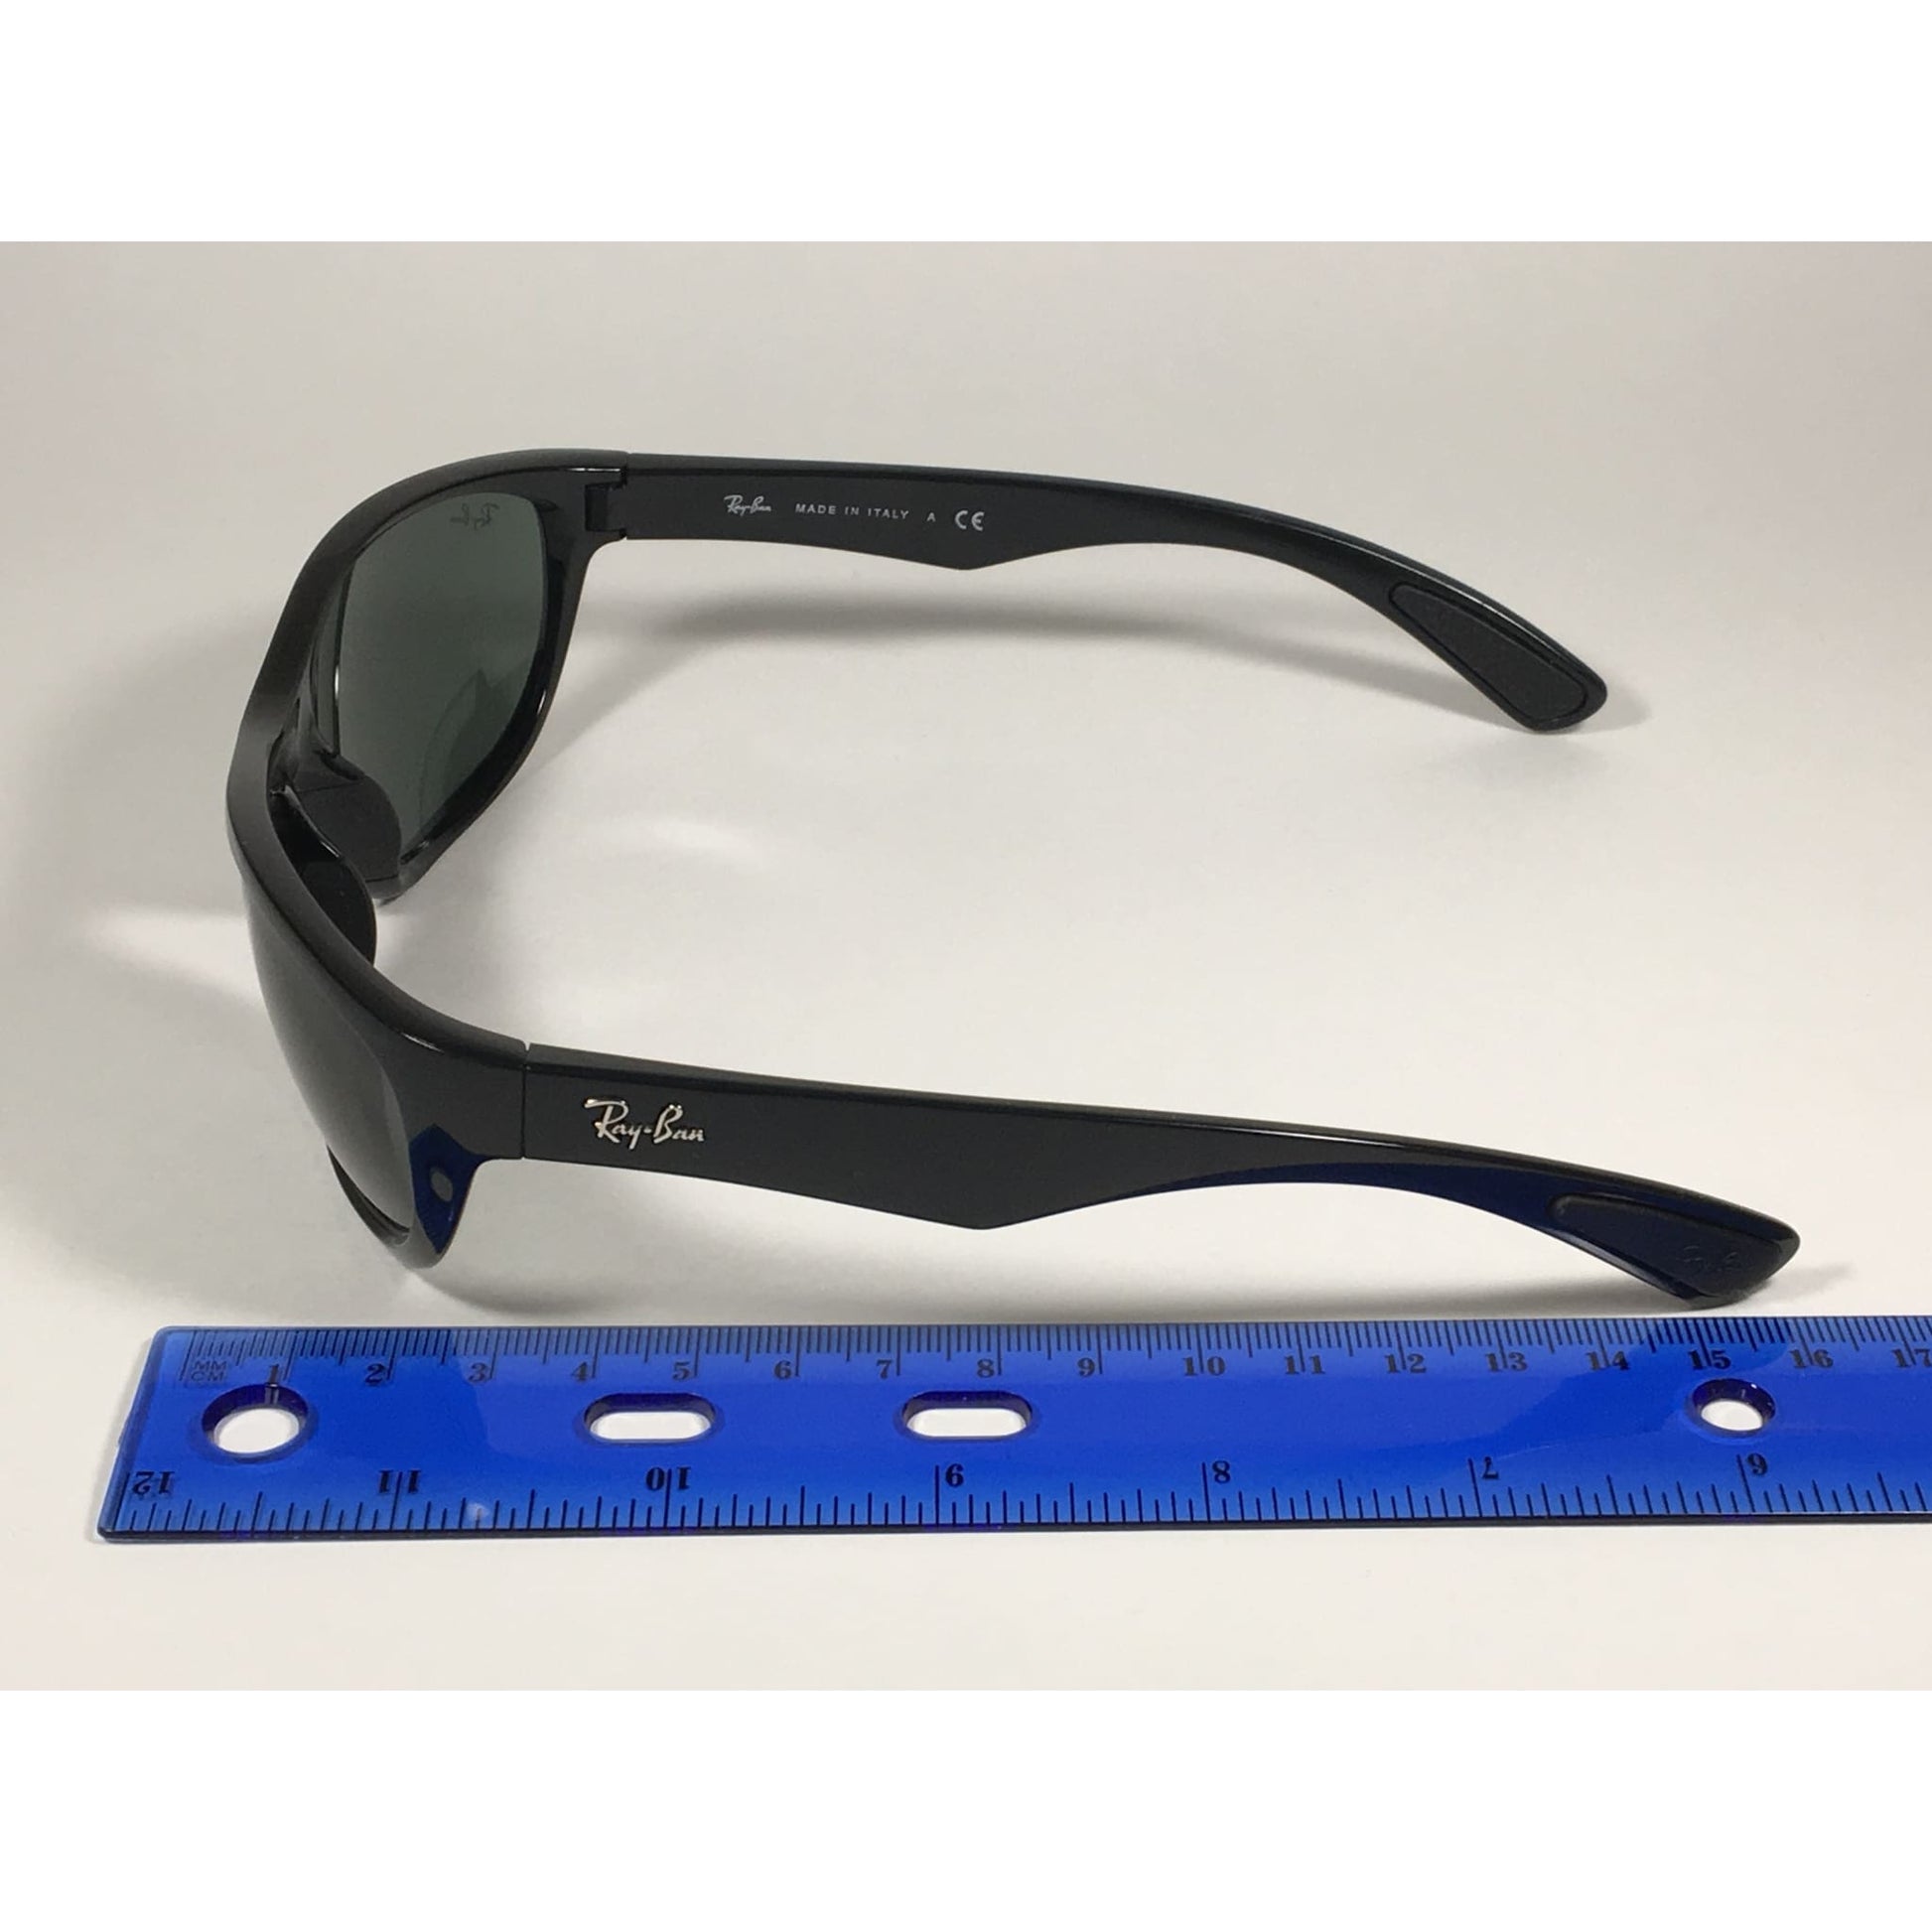 Ray-Ban Active Sport Sunglasses Black Gloss Frame Green Lens